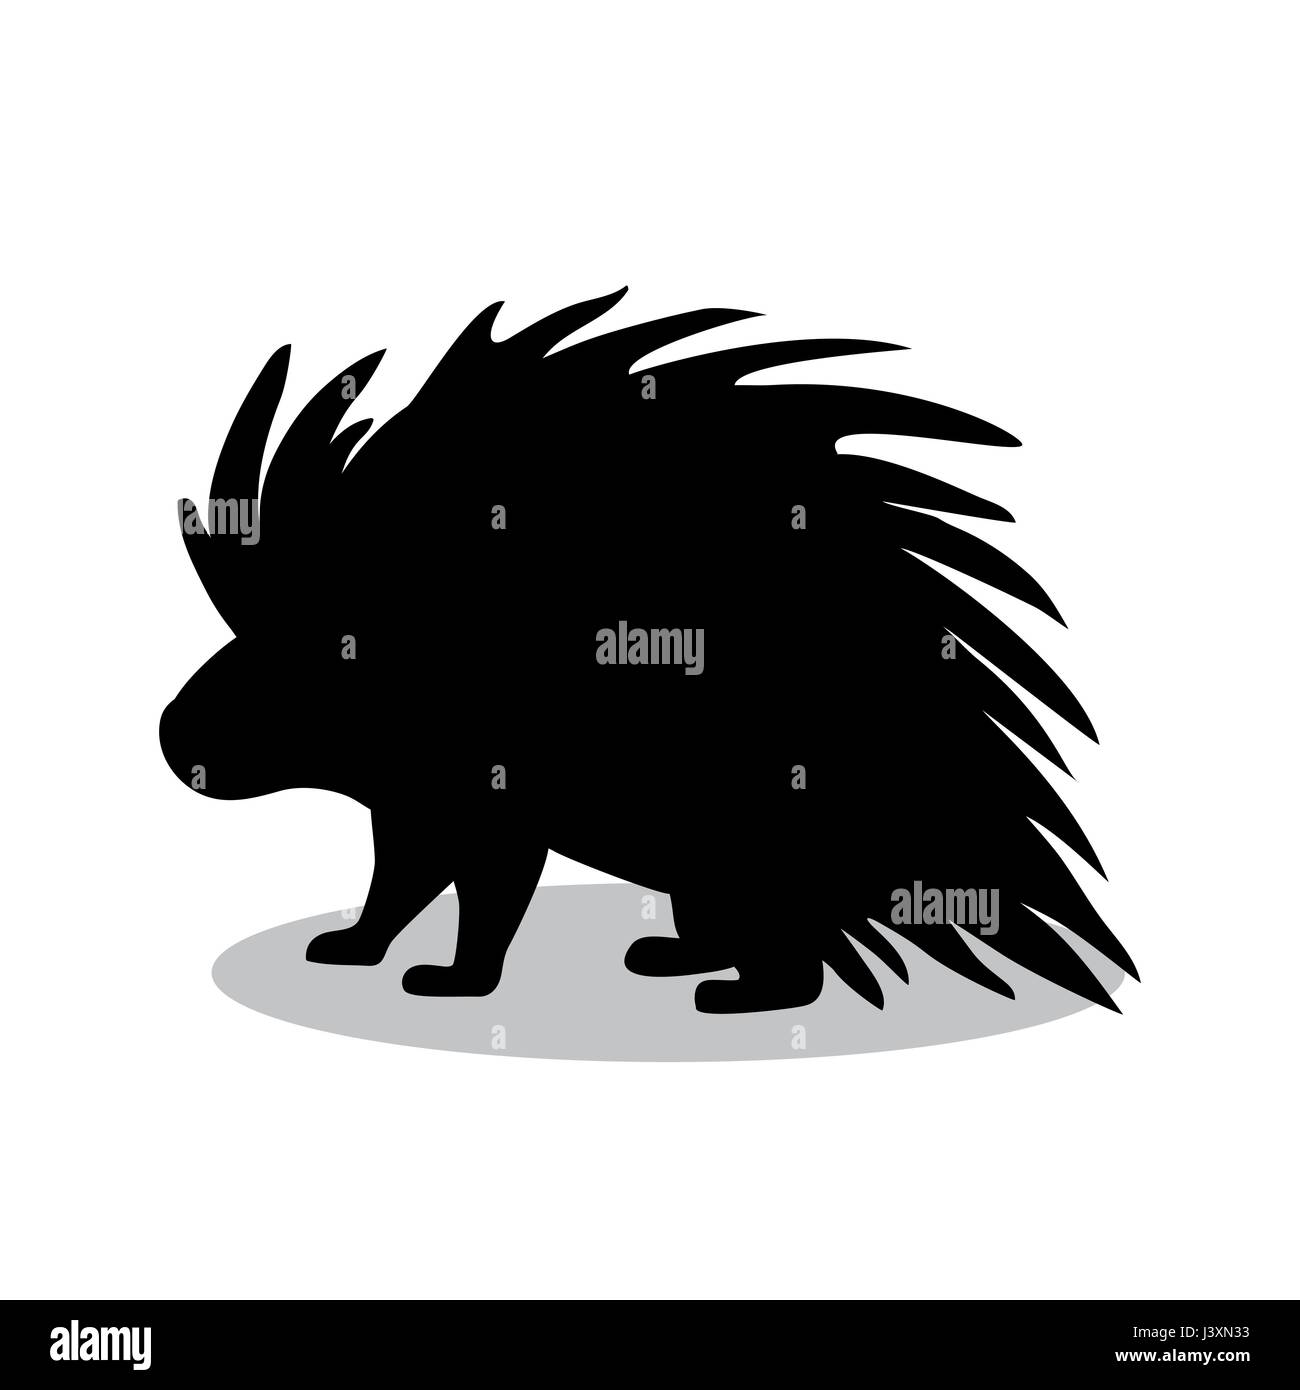 Stachelschwein Nagetier Säugetier schwarze Silhouette Tier Stock Vektor